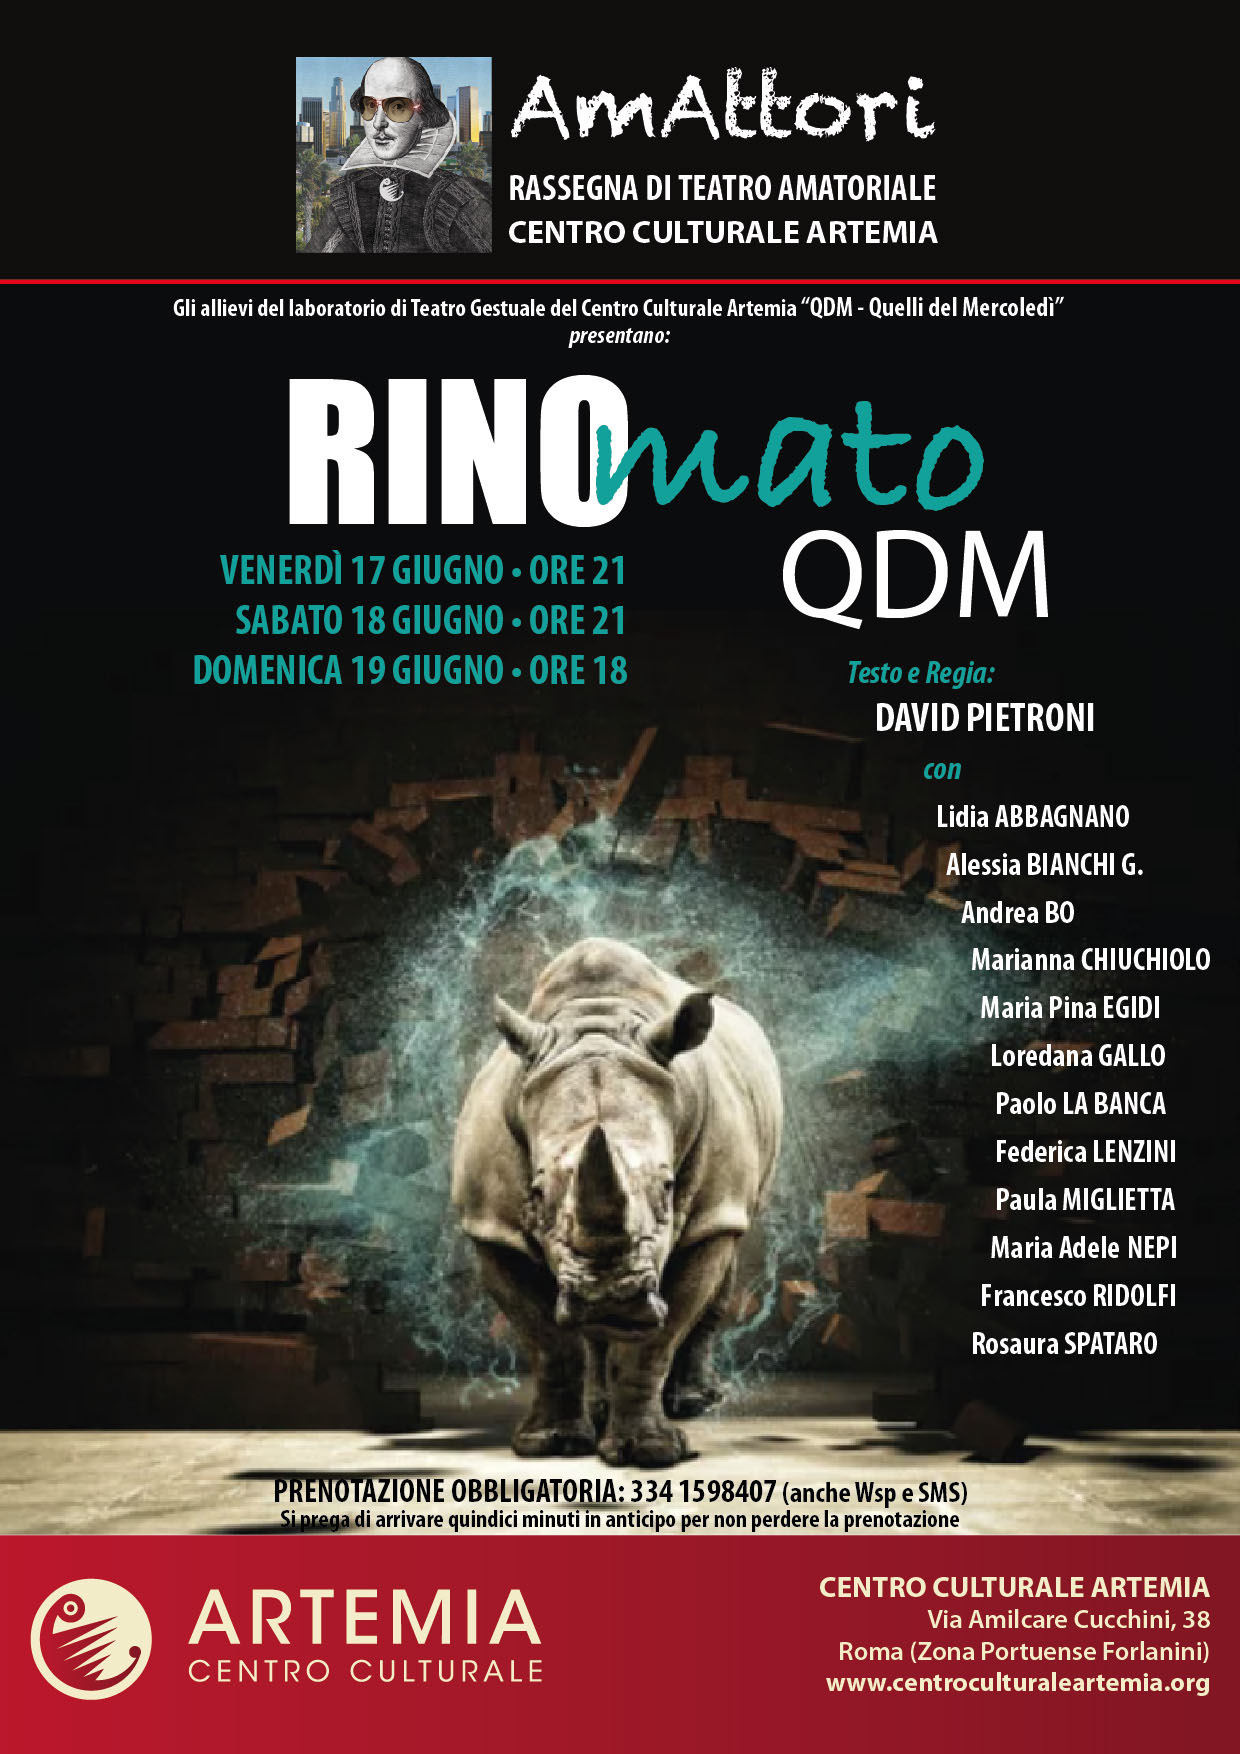 RinoMato QDM – “AmAttori” Rassegna di Teatro Amatoriale